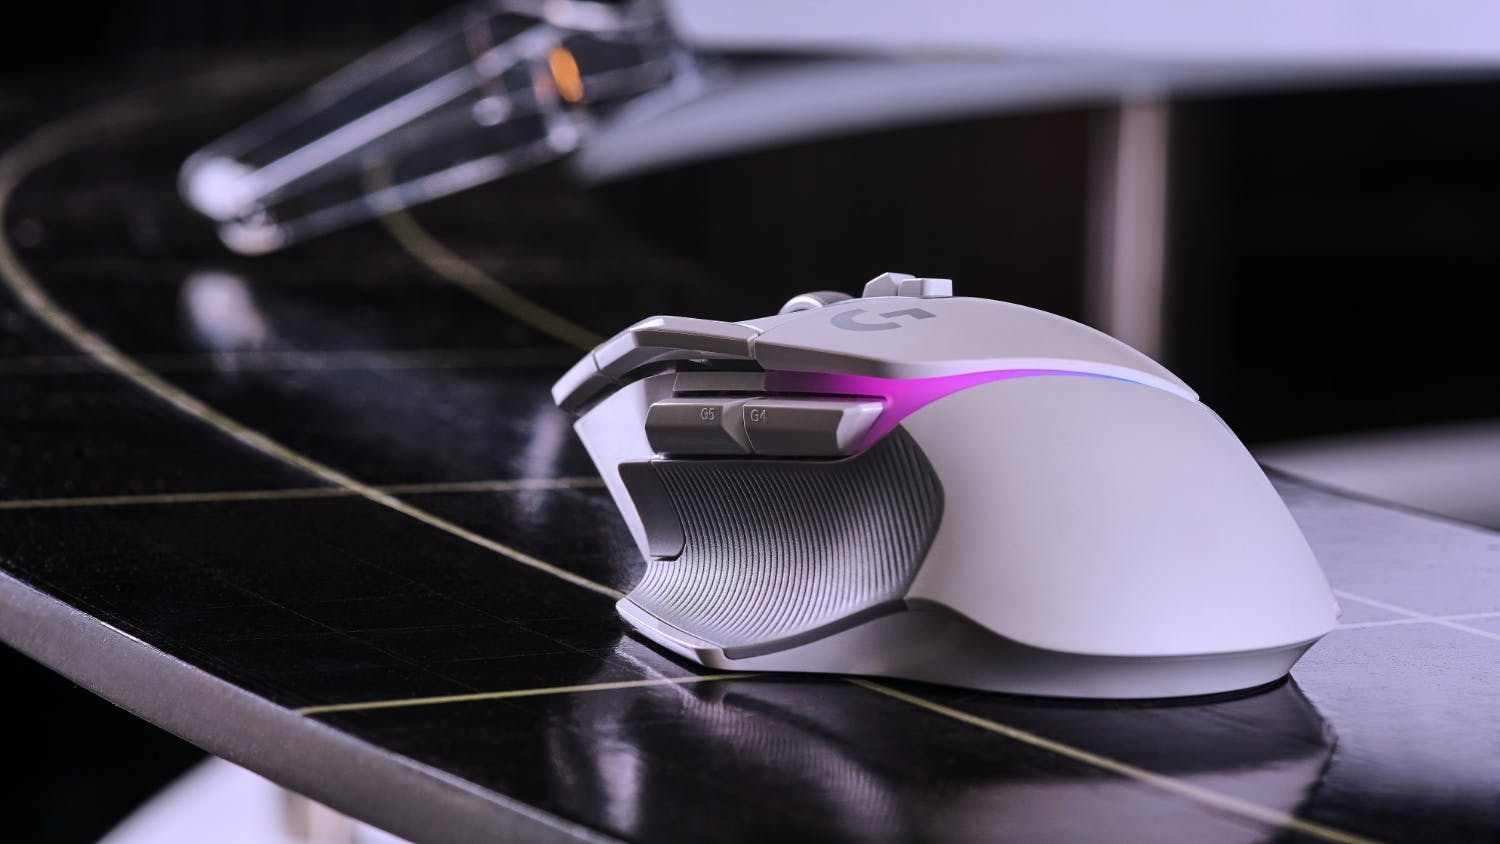 Logitech G502 X Plus LIGHTSPEED Wireless Gaming Mouse - White